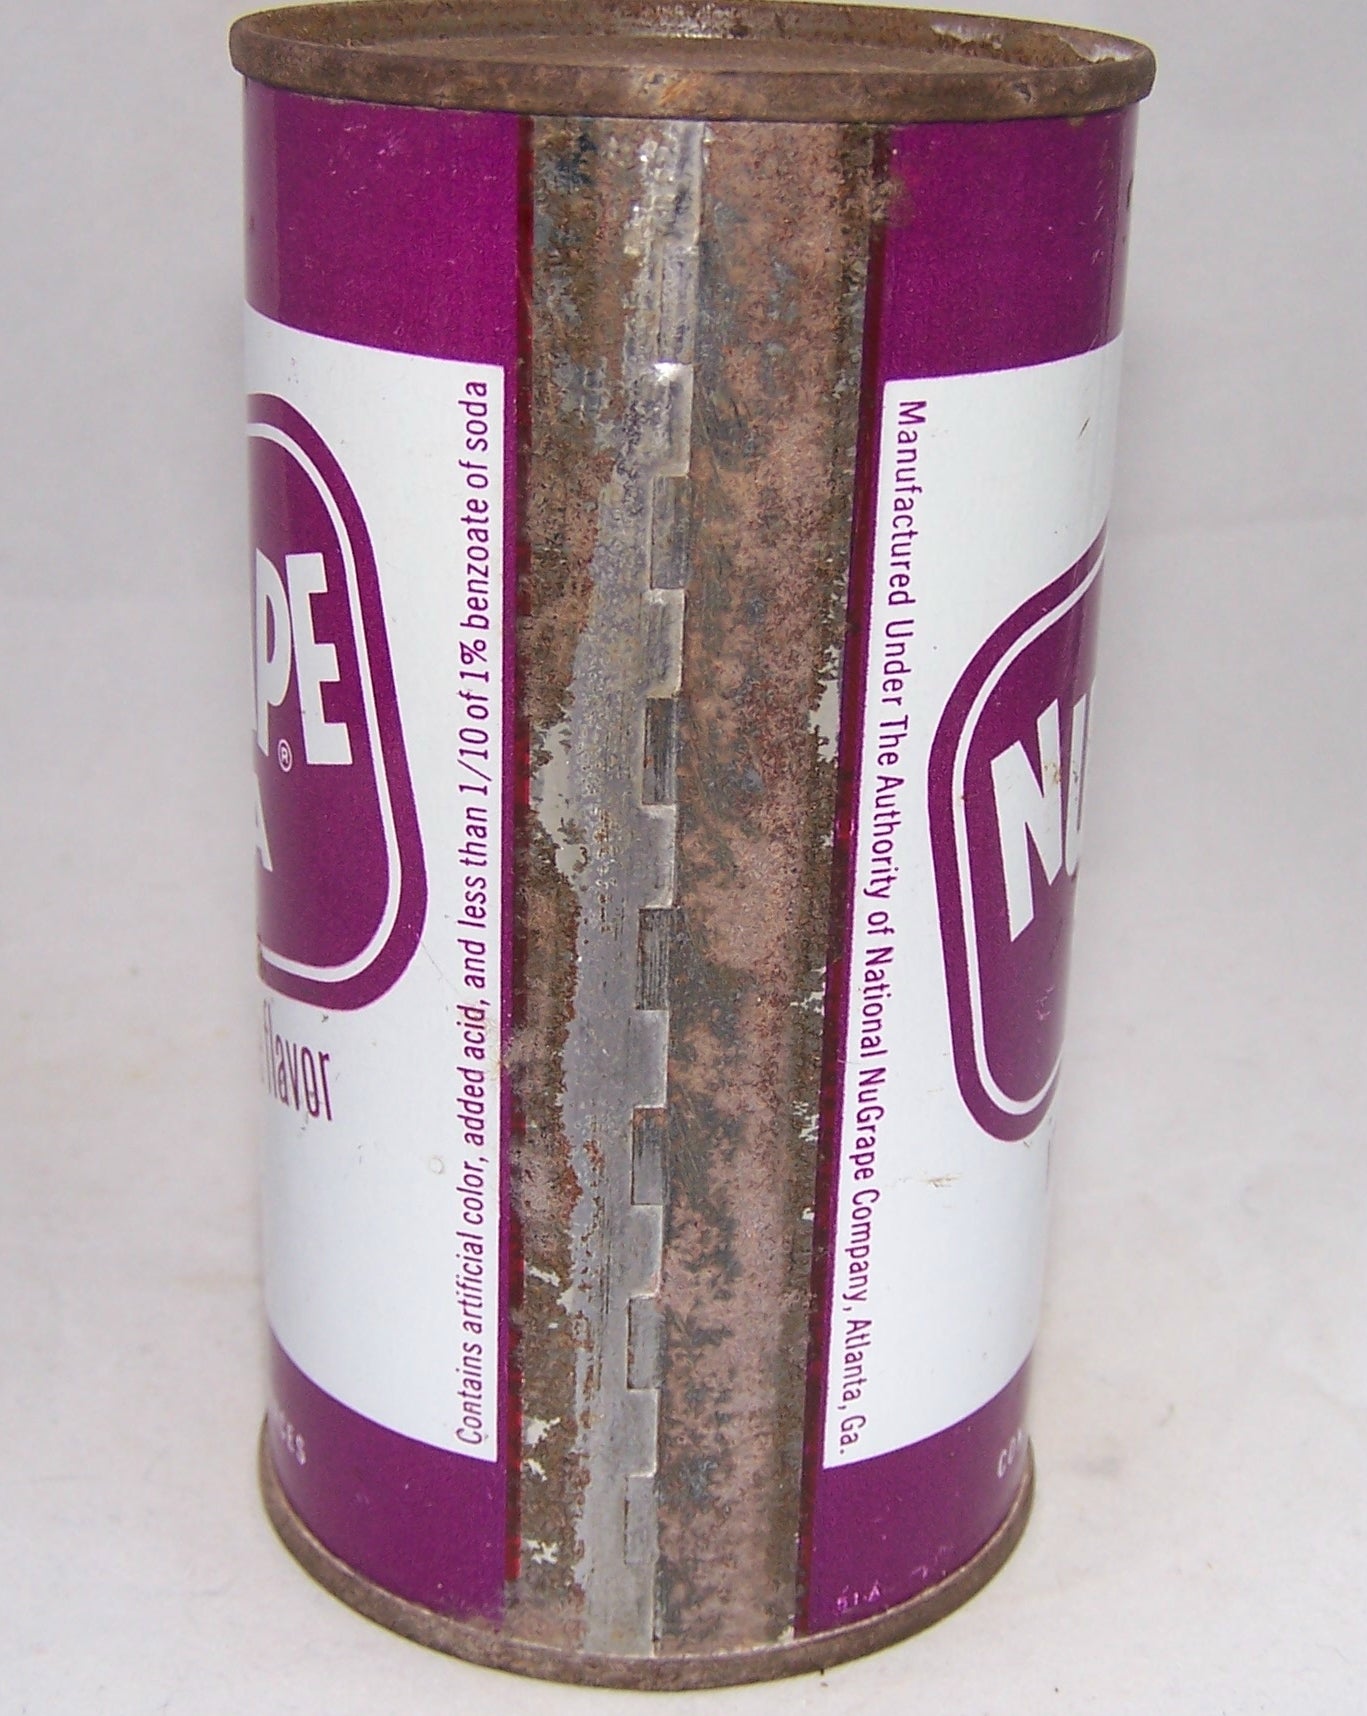 NuGrape Imitation Grape Flavor, Very Tough can, Grade 1 Sold on 09/03/17